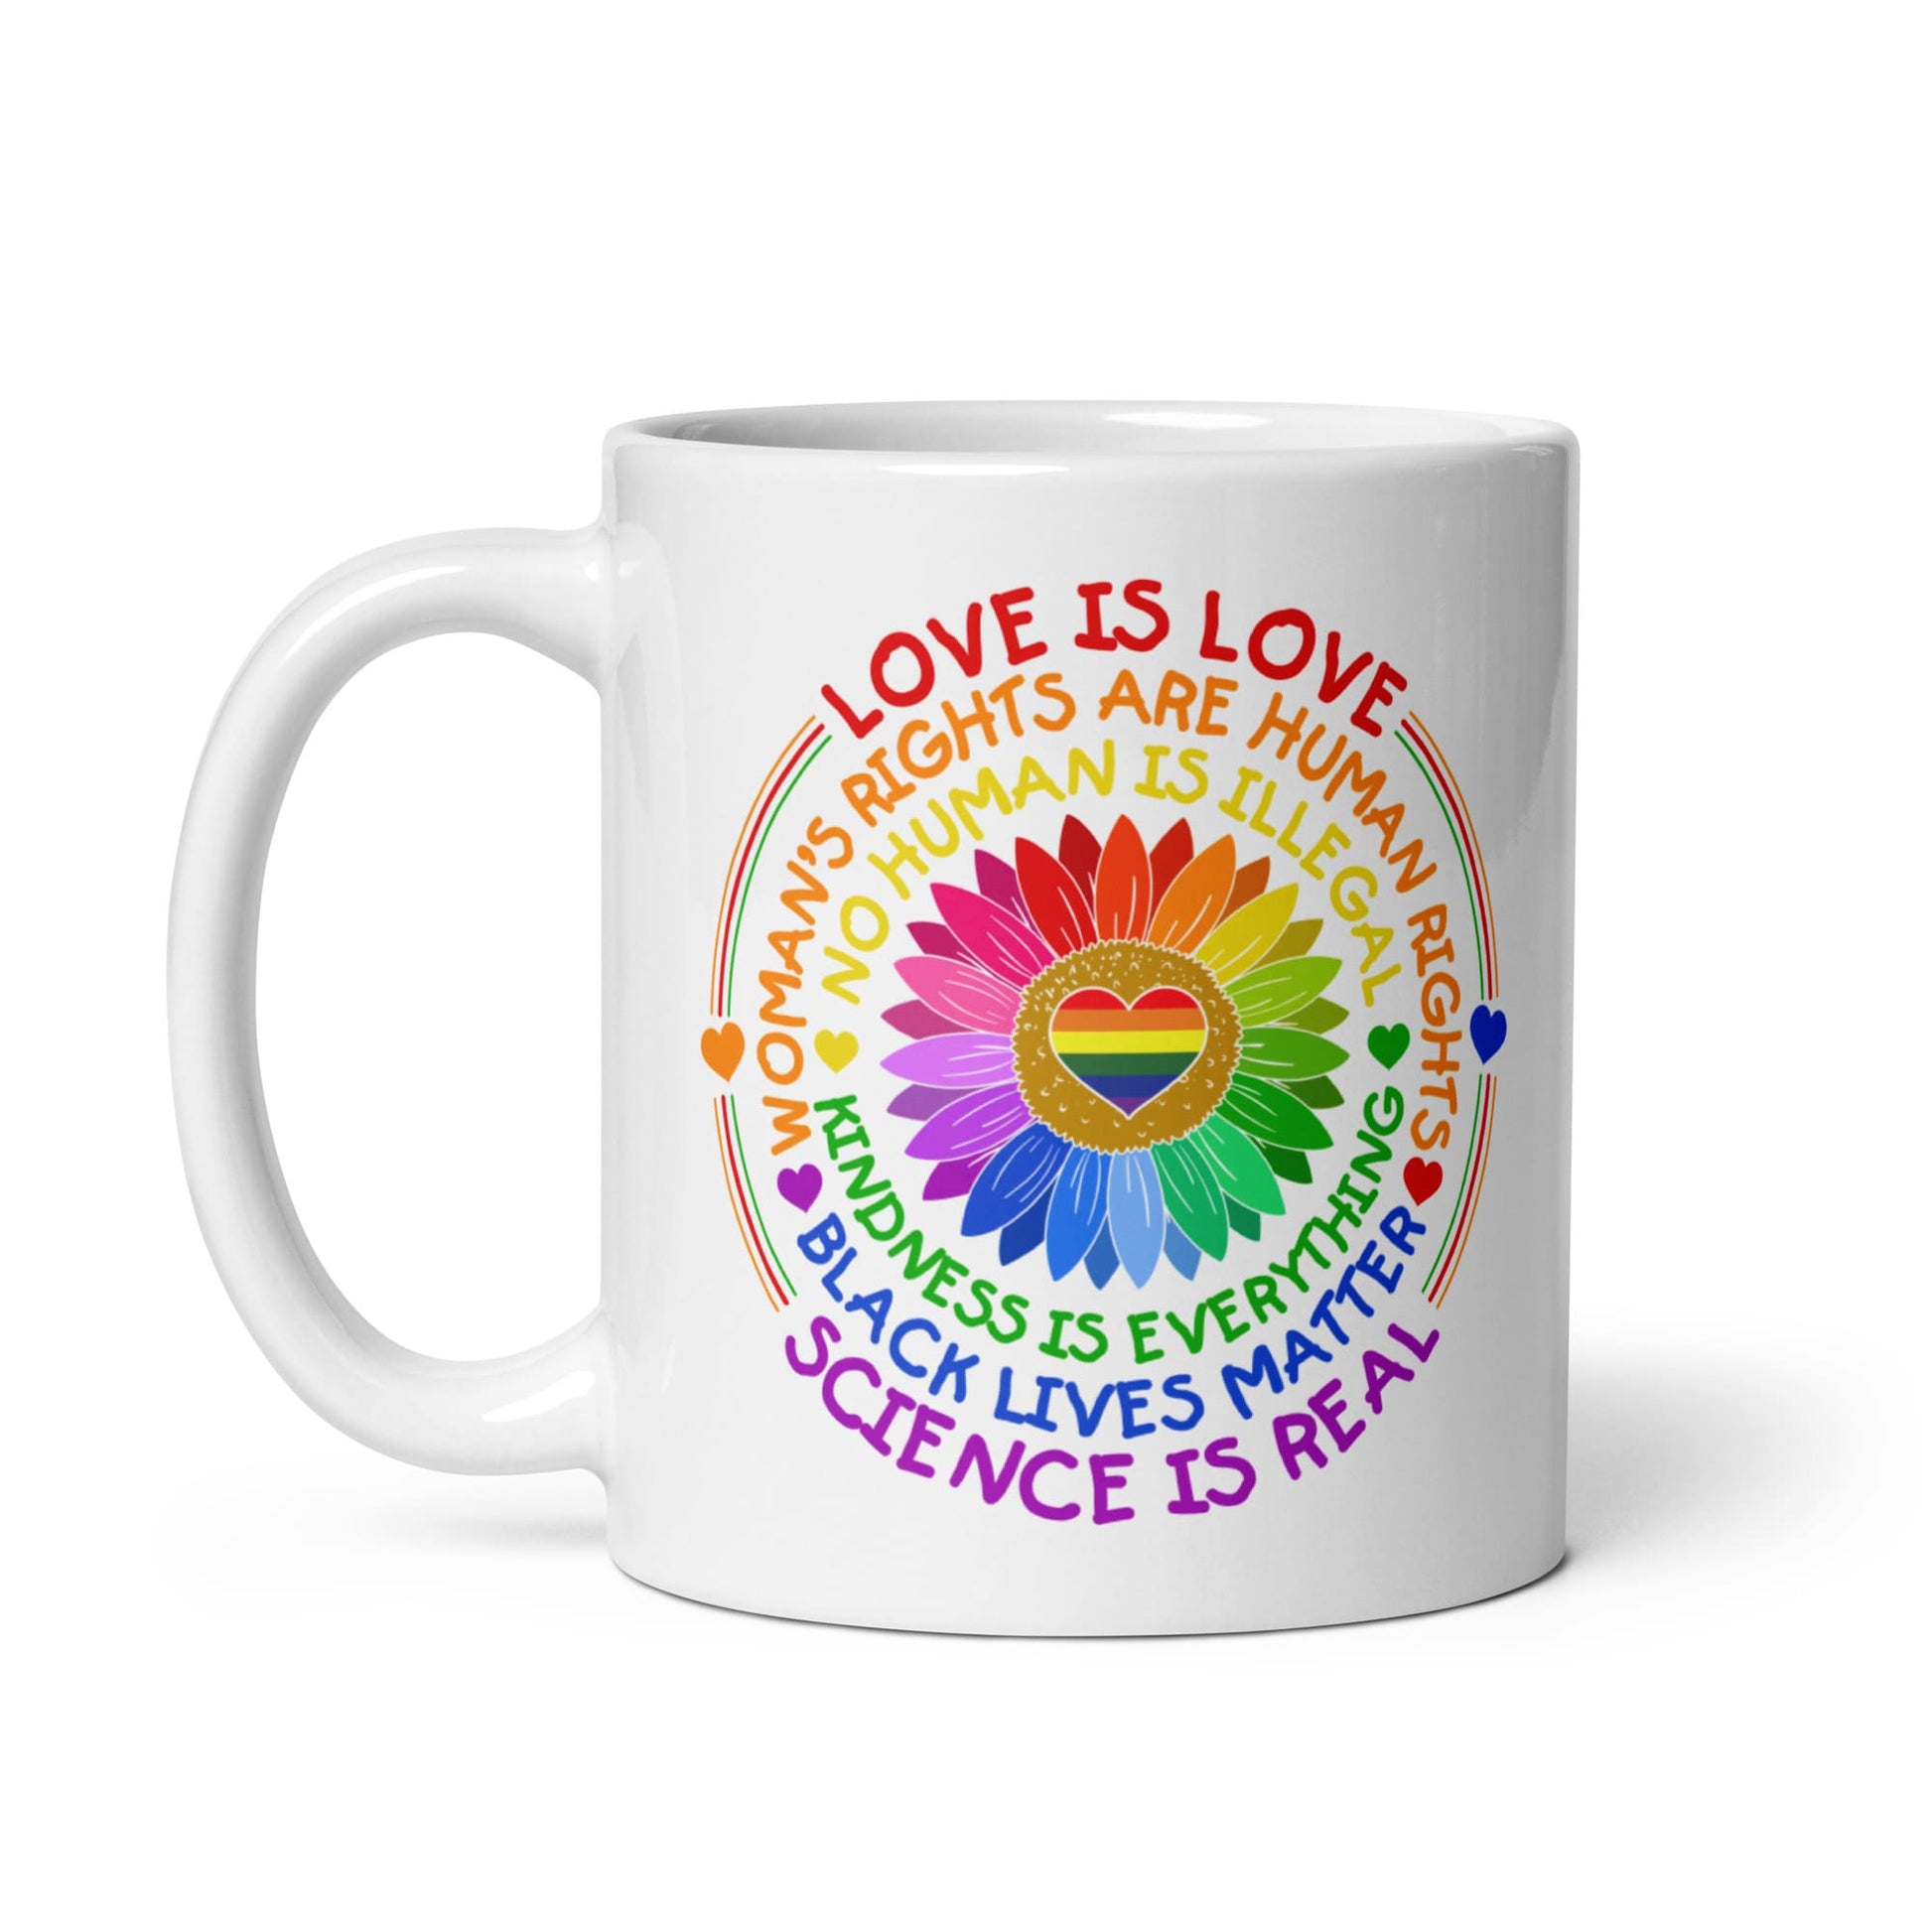 LGBTQ pride mug, human rights coffee or tea cup left